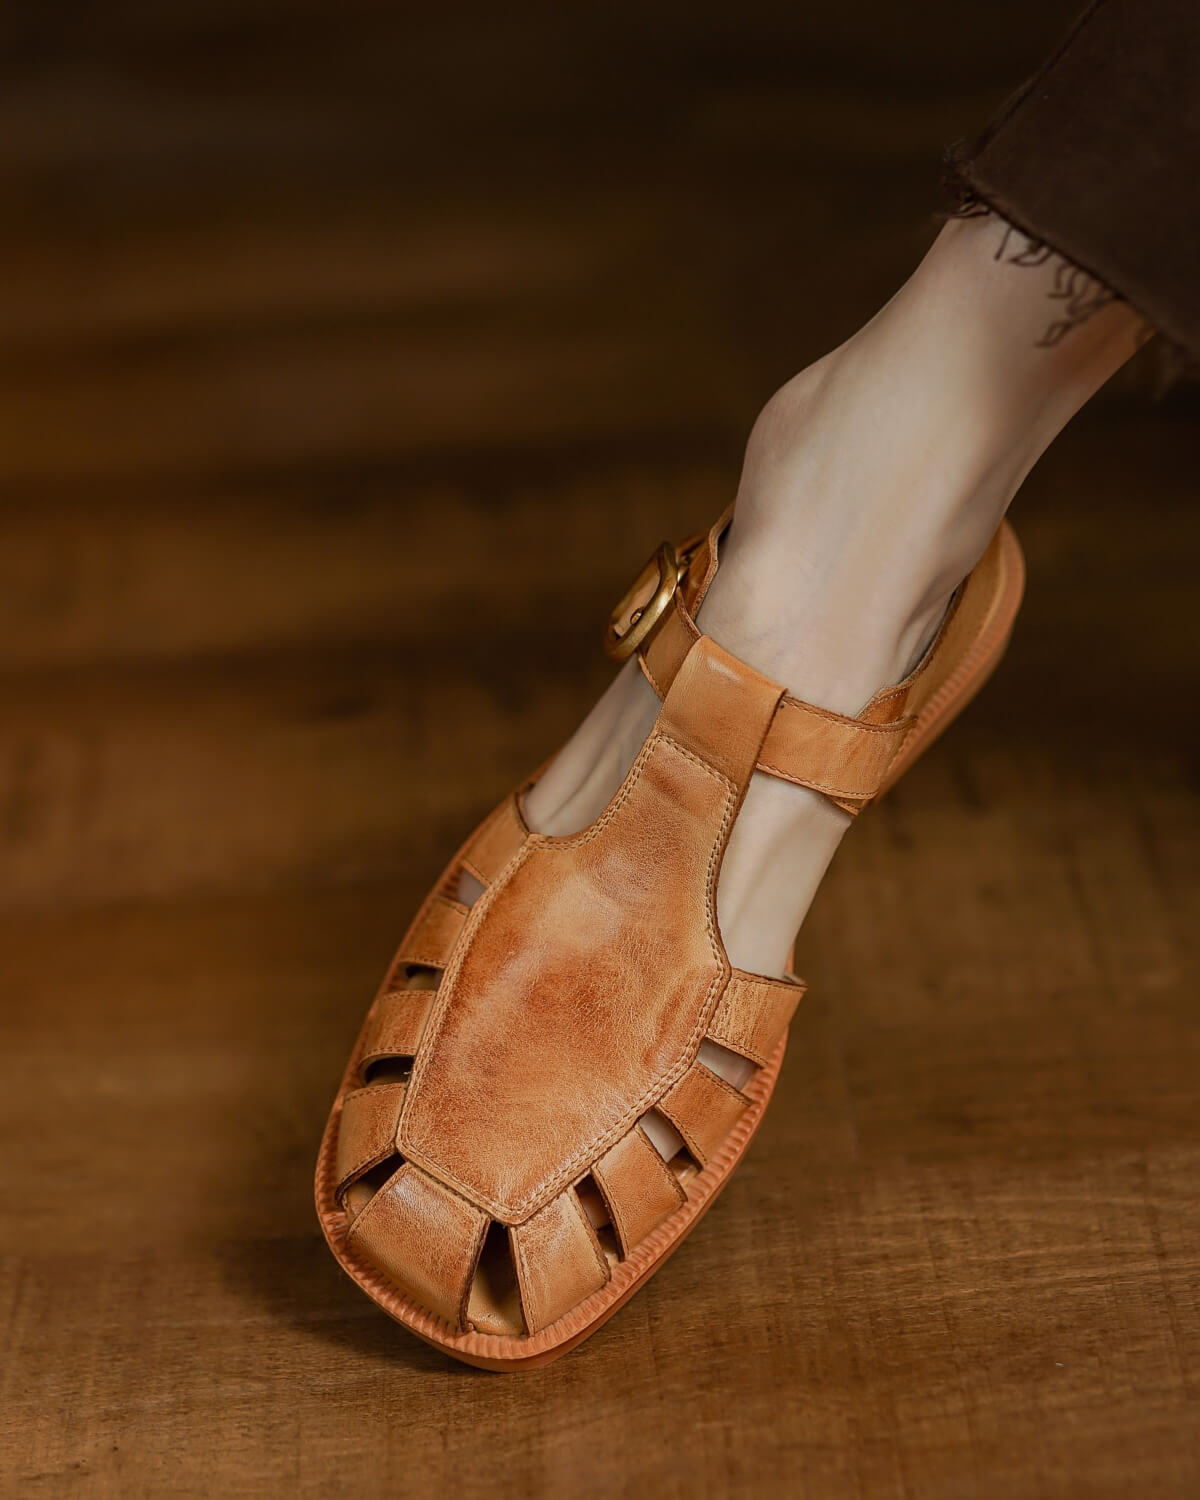 Savana-fisherman-tan-leather-flat-sandals-model